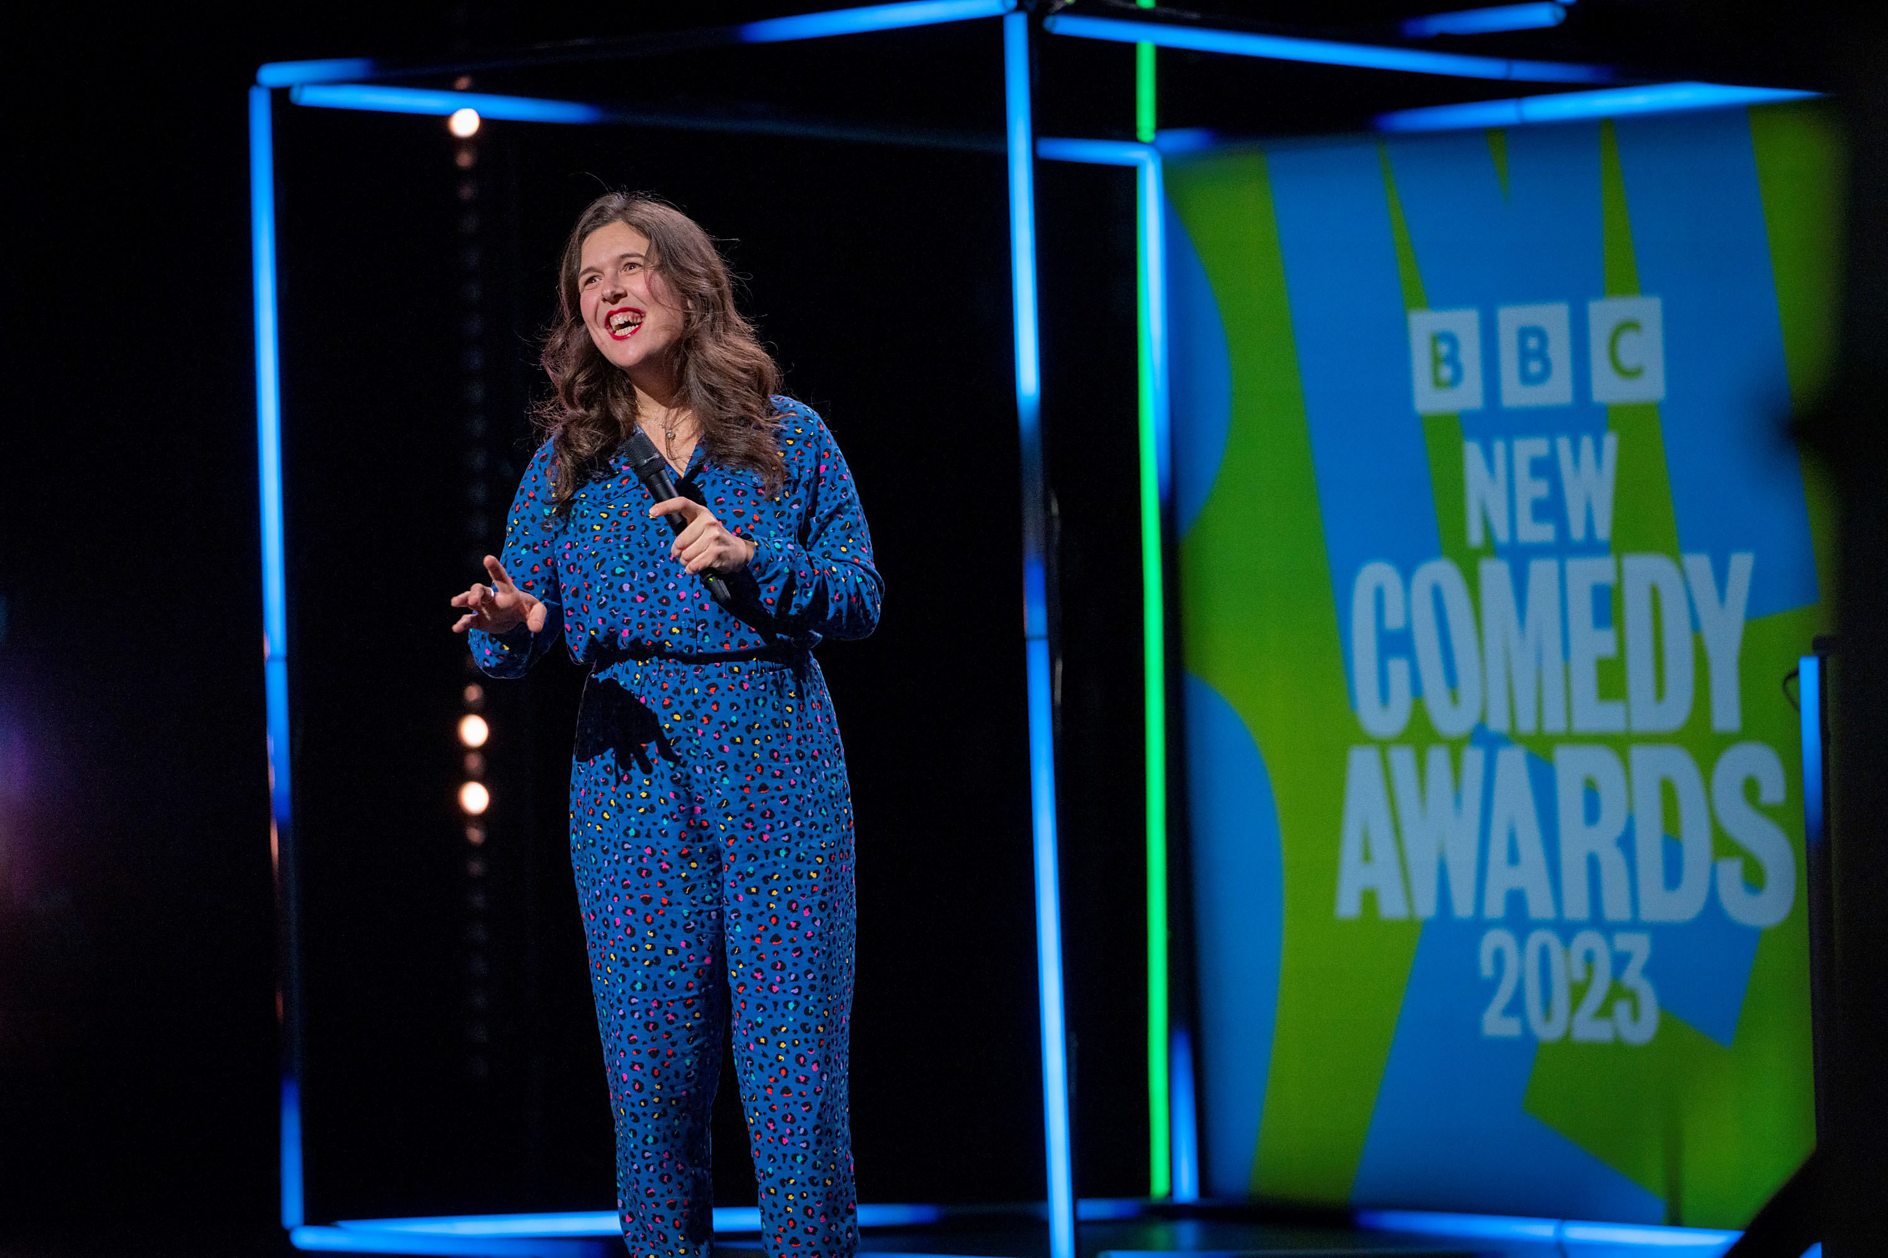 BBC New Comedy Awards Final 2023 - Meet the host Rosie Jones